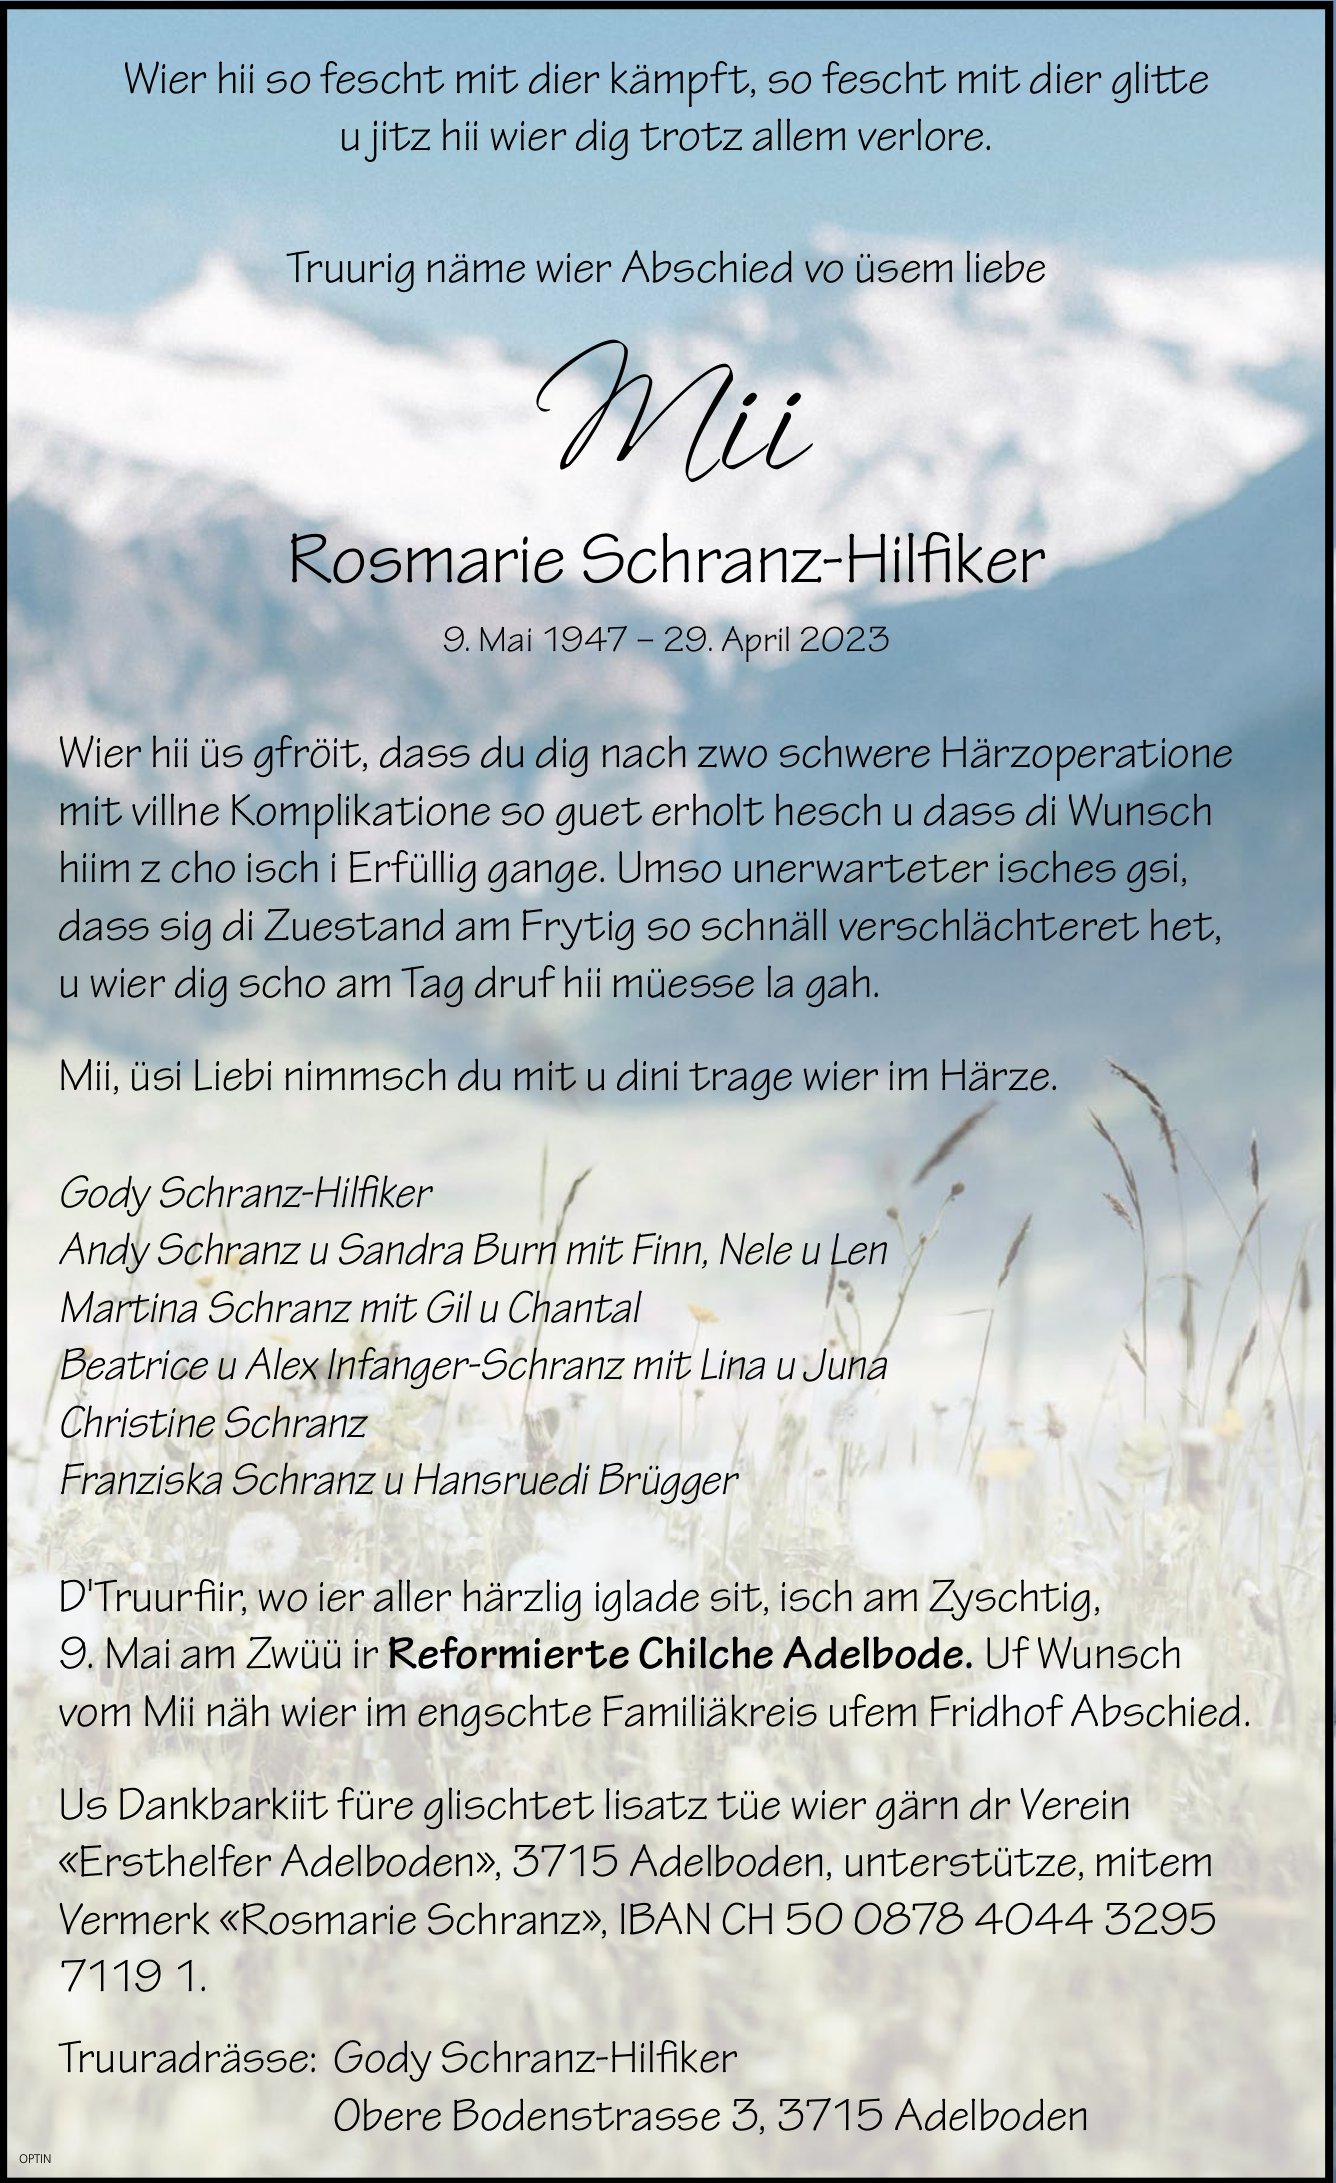 Rosmarie Schranz-Hilfiker, April 2023 / TA